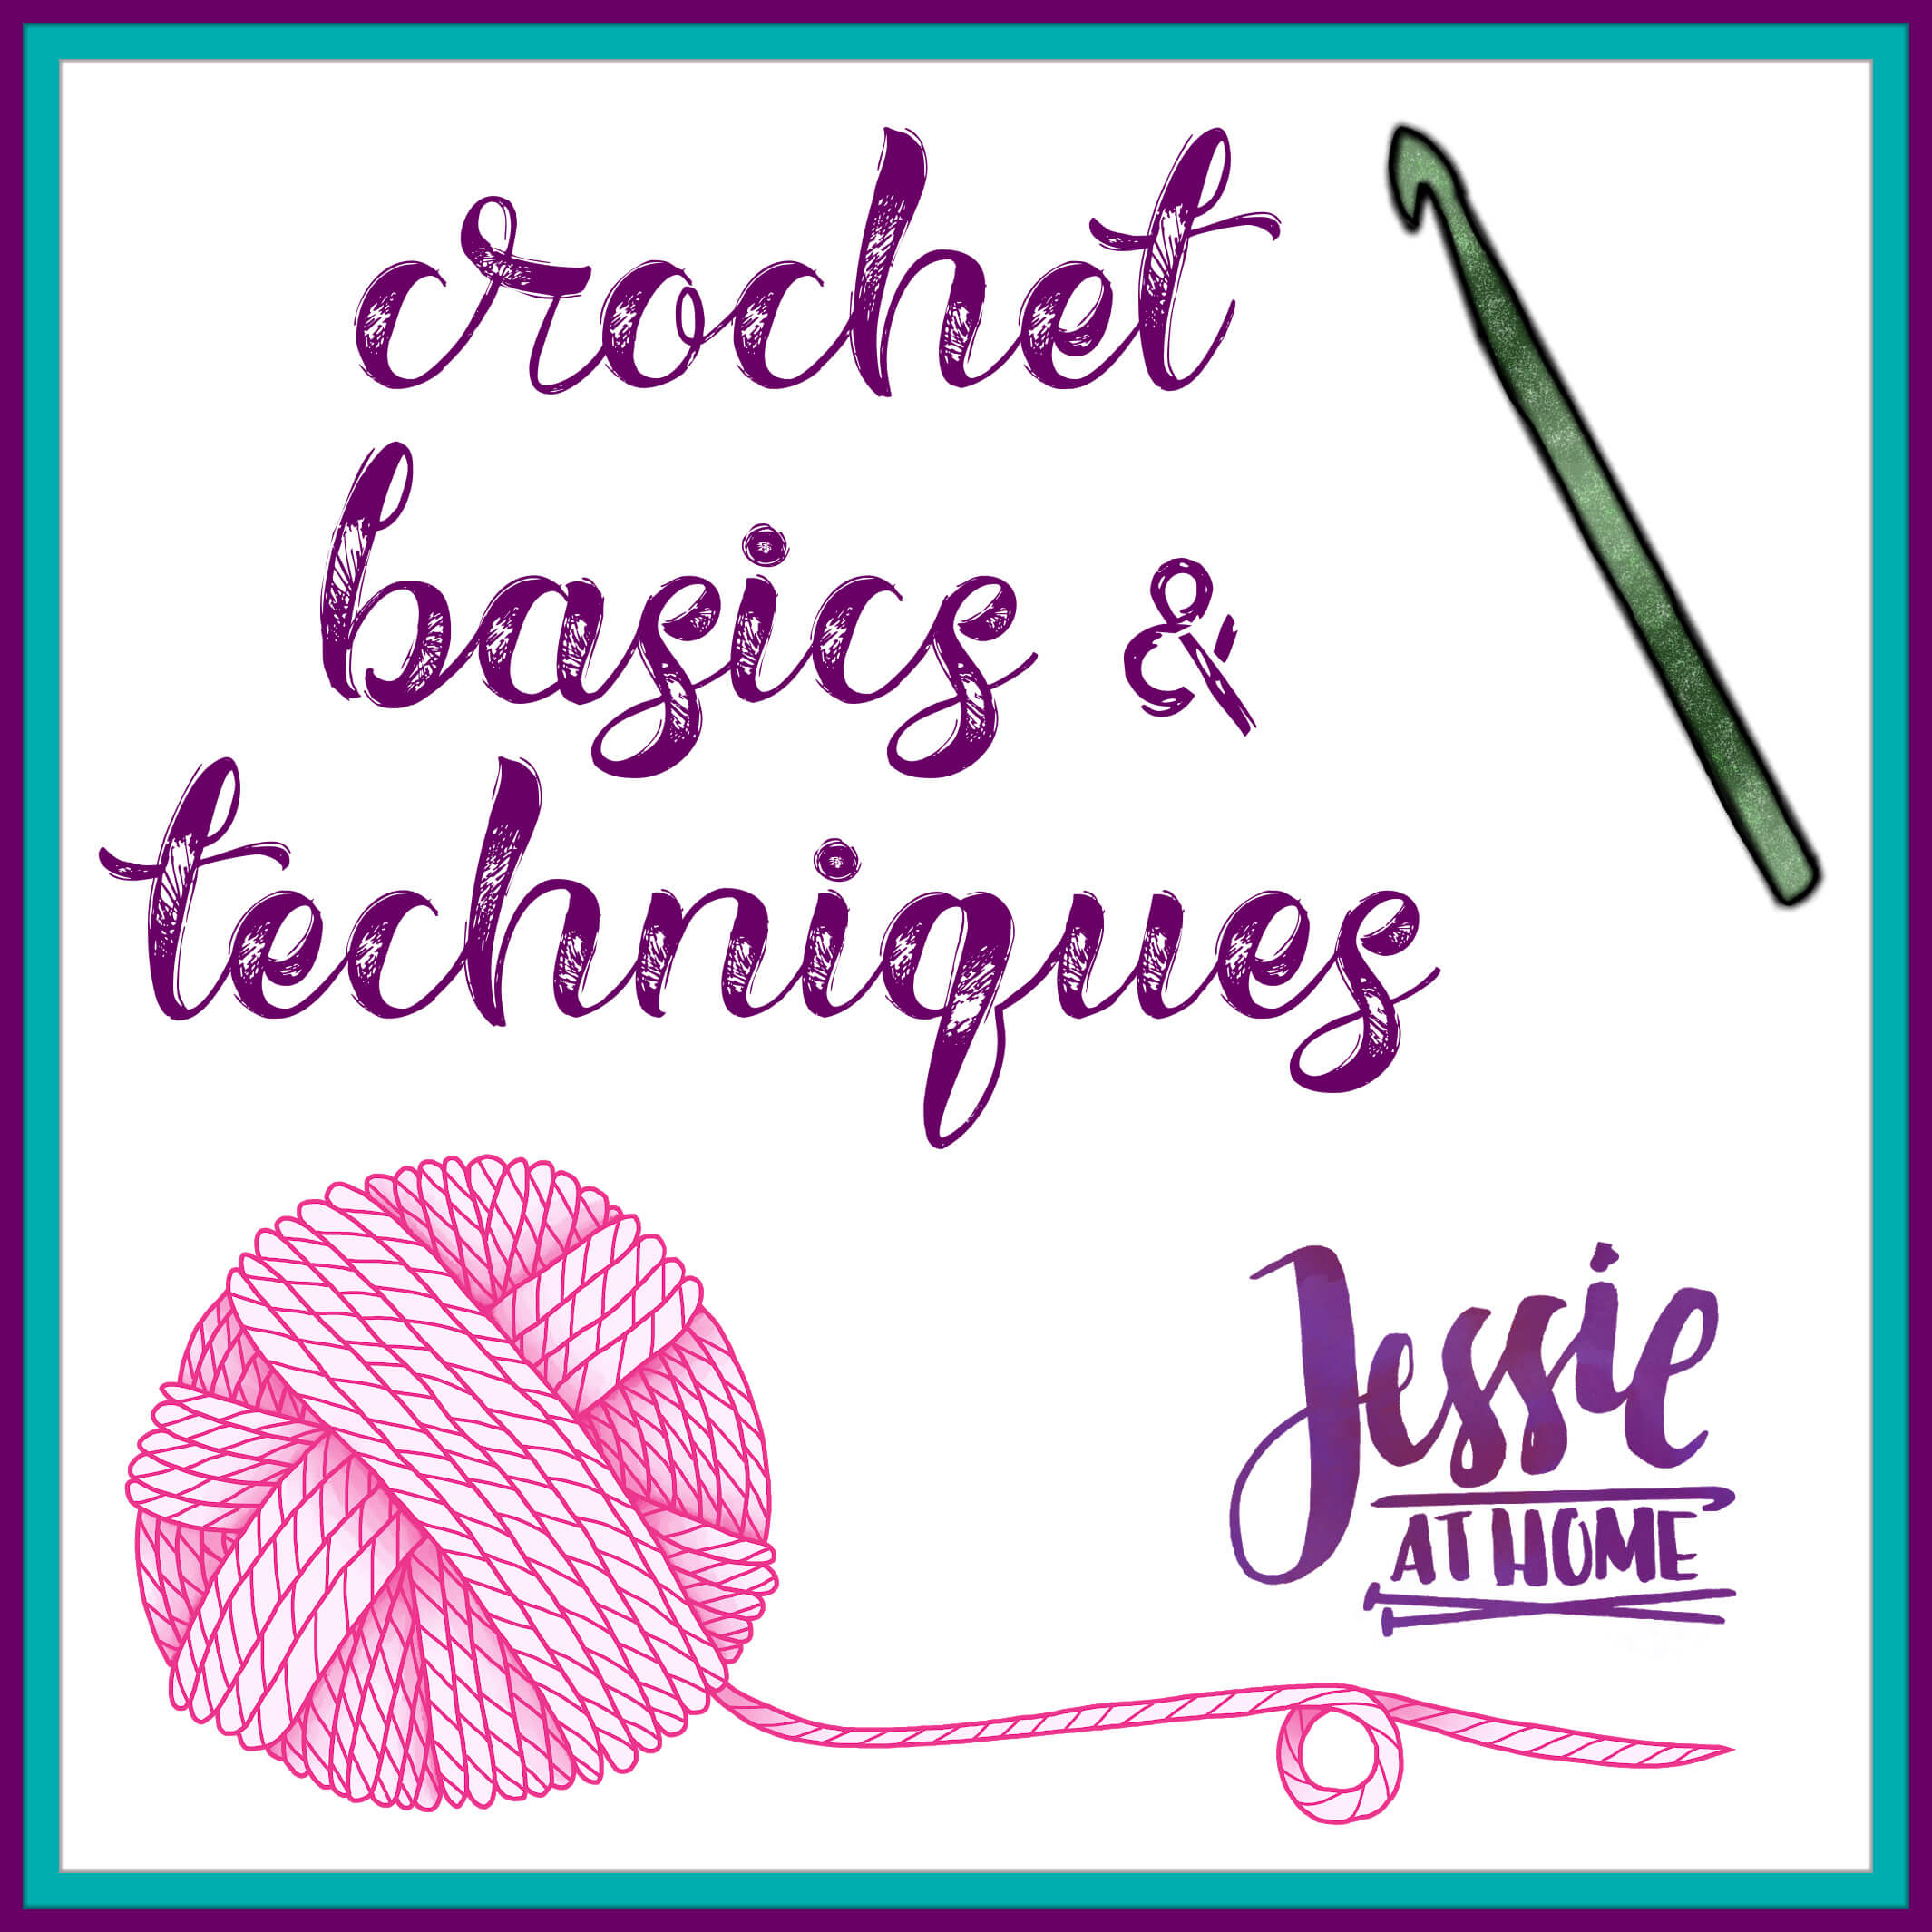 Crochet Basics & Techniques Menu on Jessie At Home